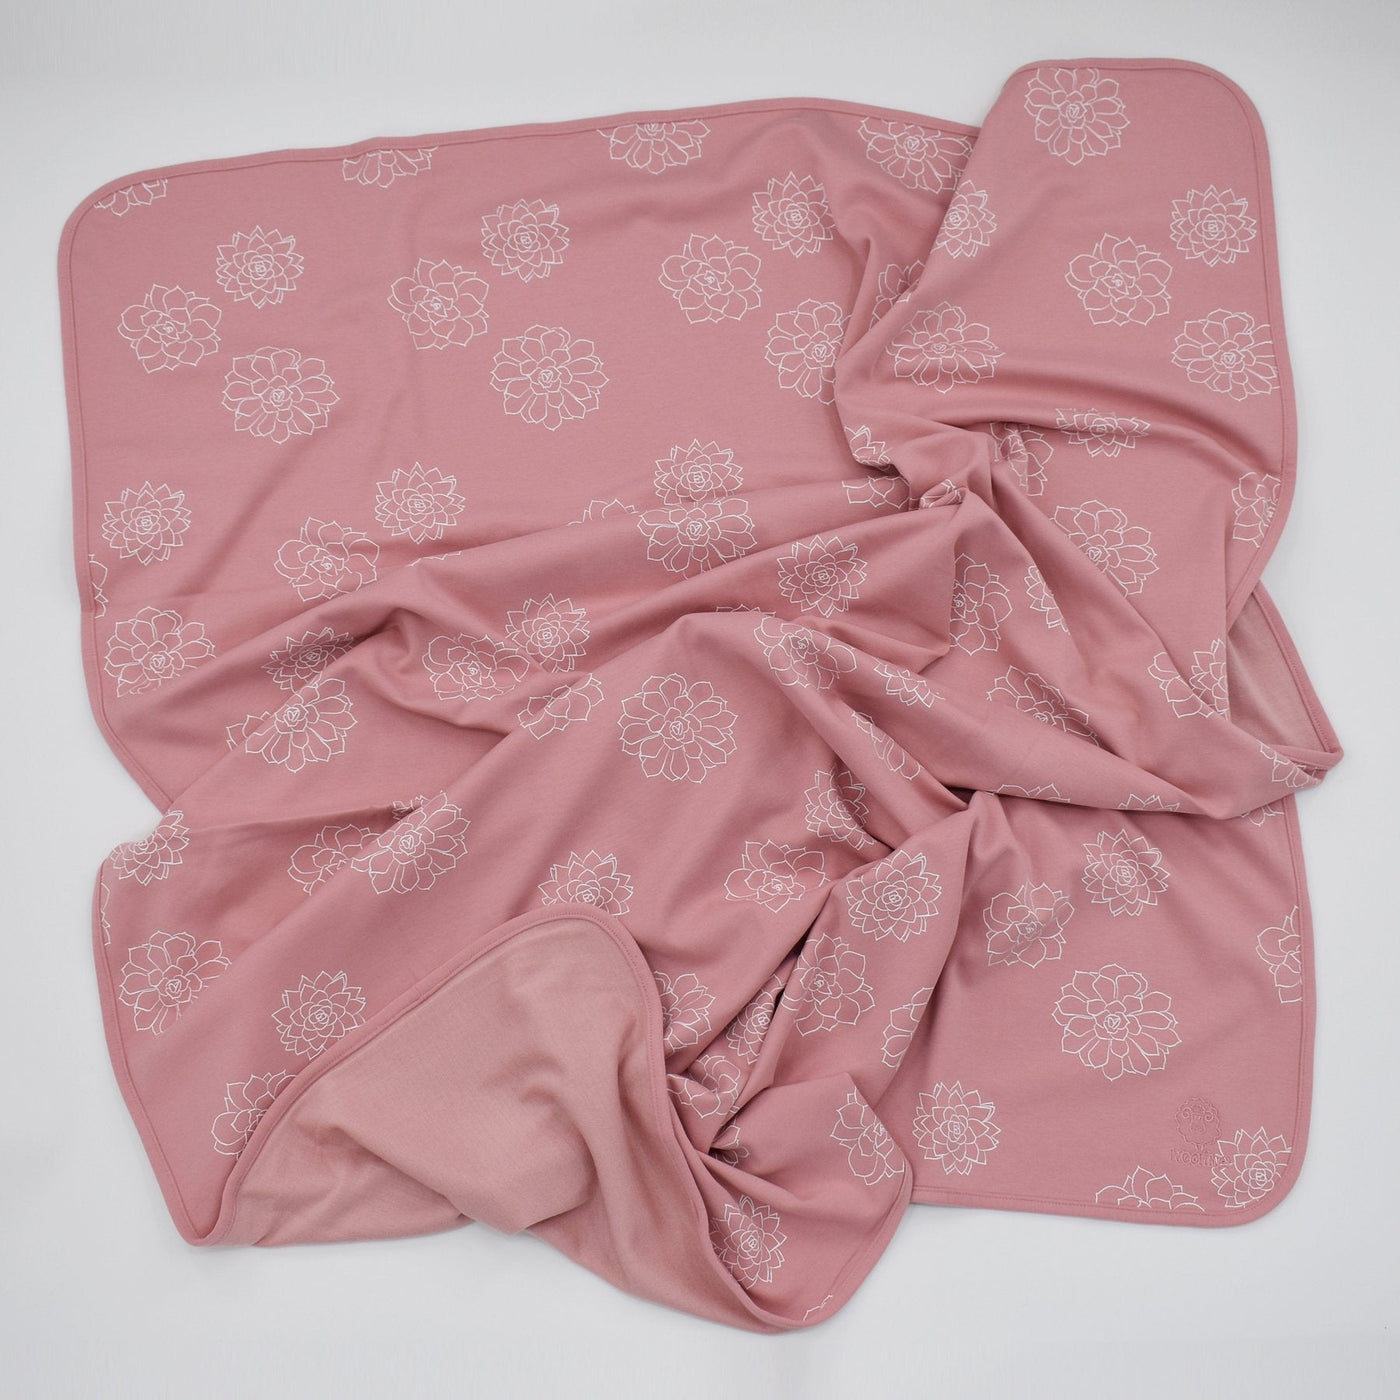 Imperfect BABY Blanket, 4 Season® Stroller Merino Wool & Organic Cotton Blanket, 40" x 31.5", Succulent